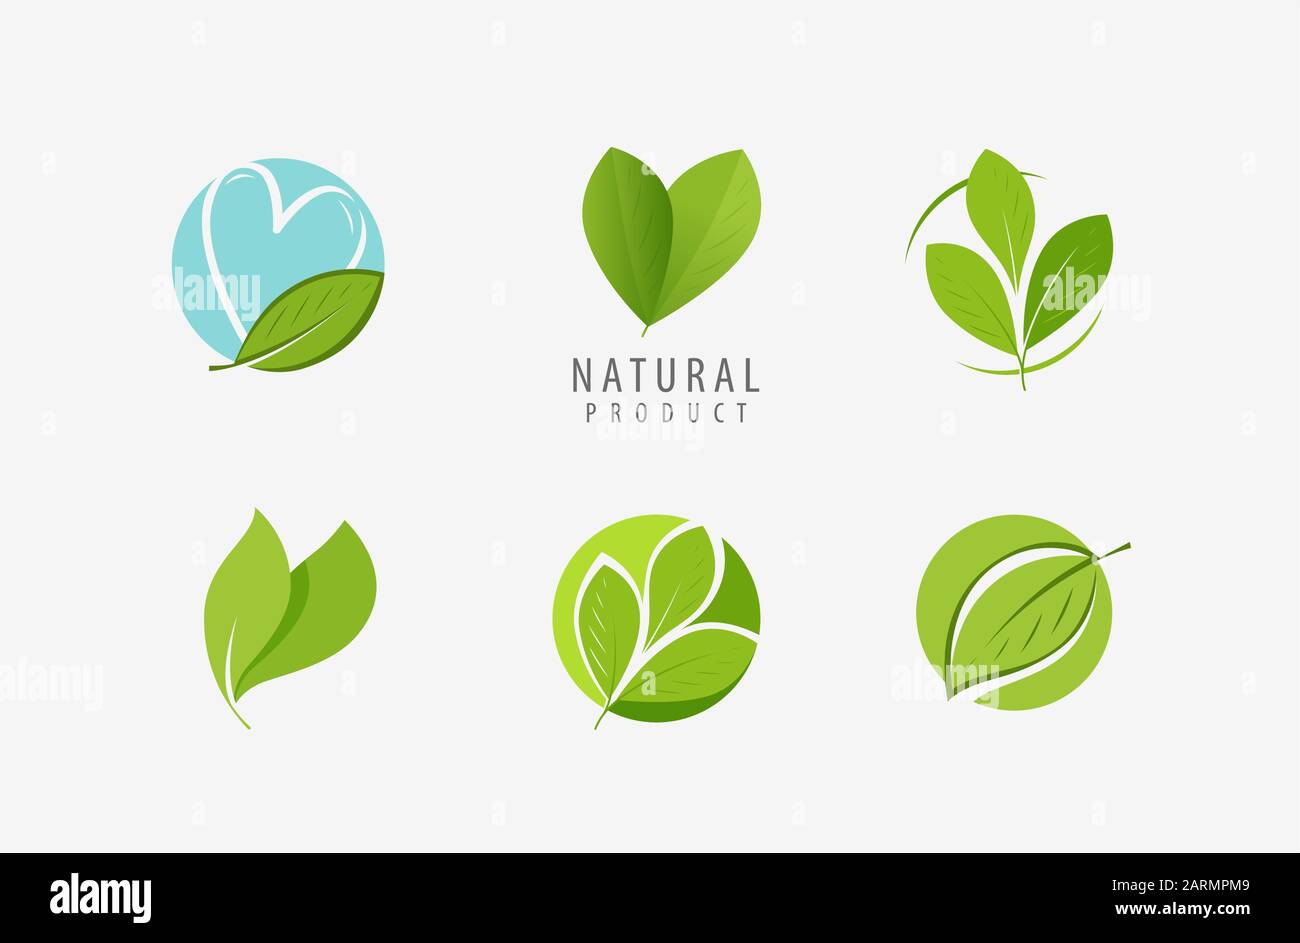 Leaf logo. Nature, eco symbol or icon vector Stock Vector